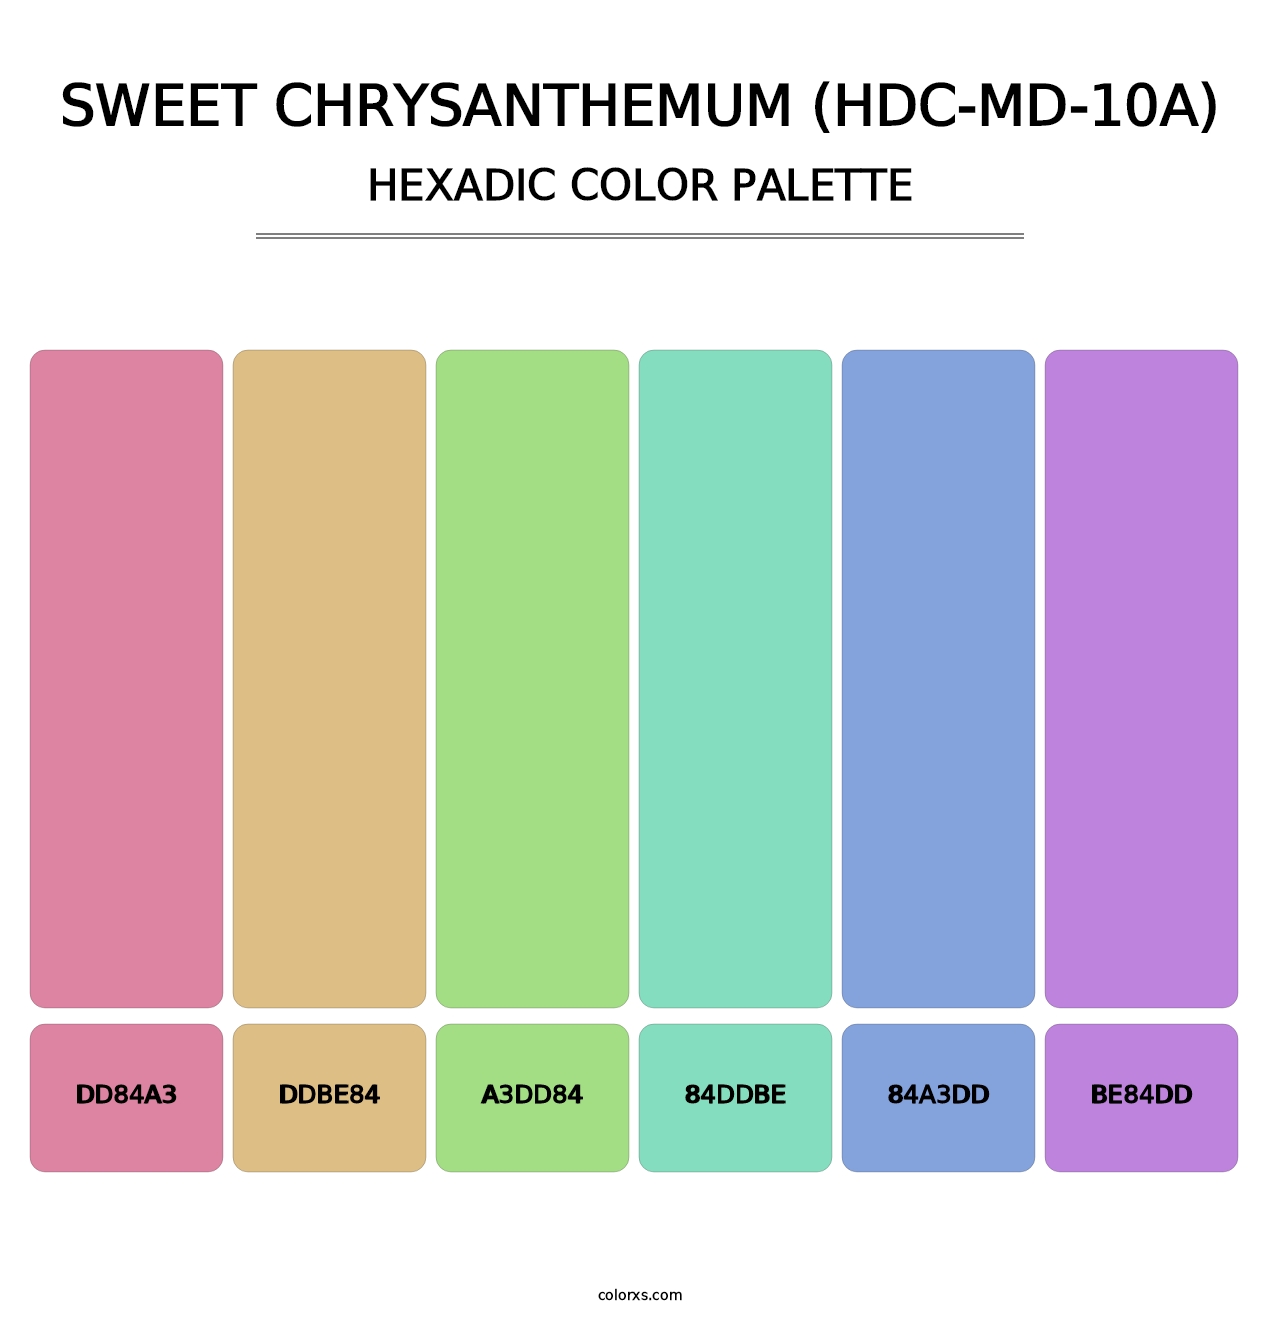 Sweet Chrysanthemum (HDC-MD-10A) - Hexadic Color Palette